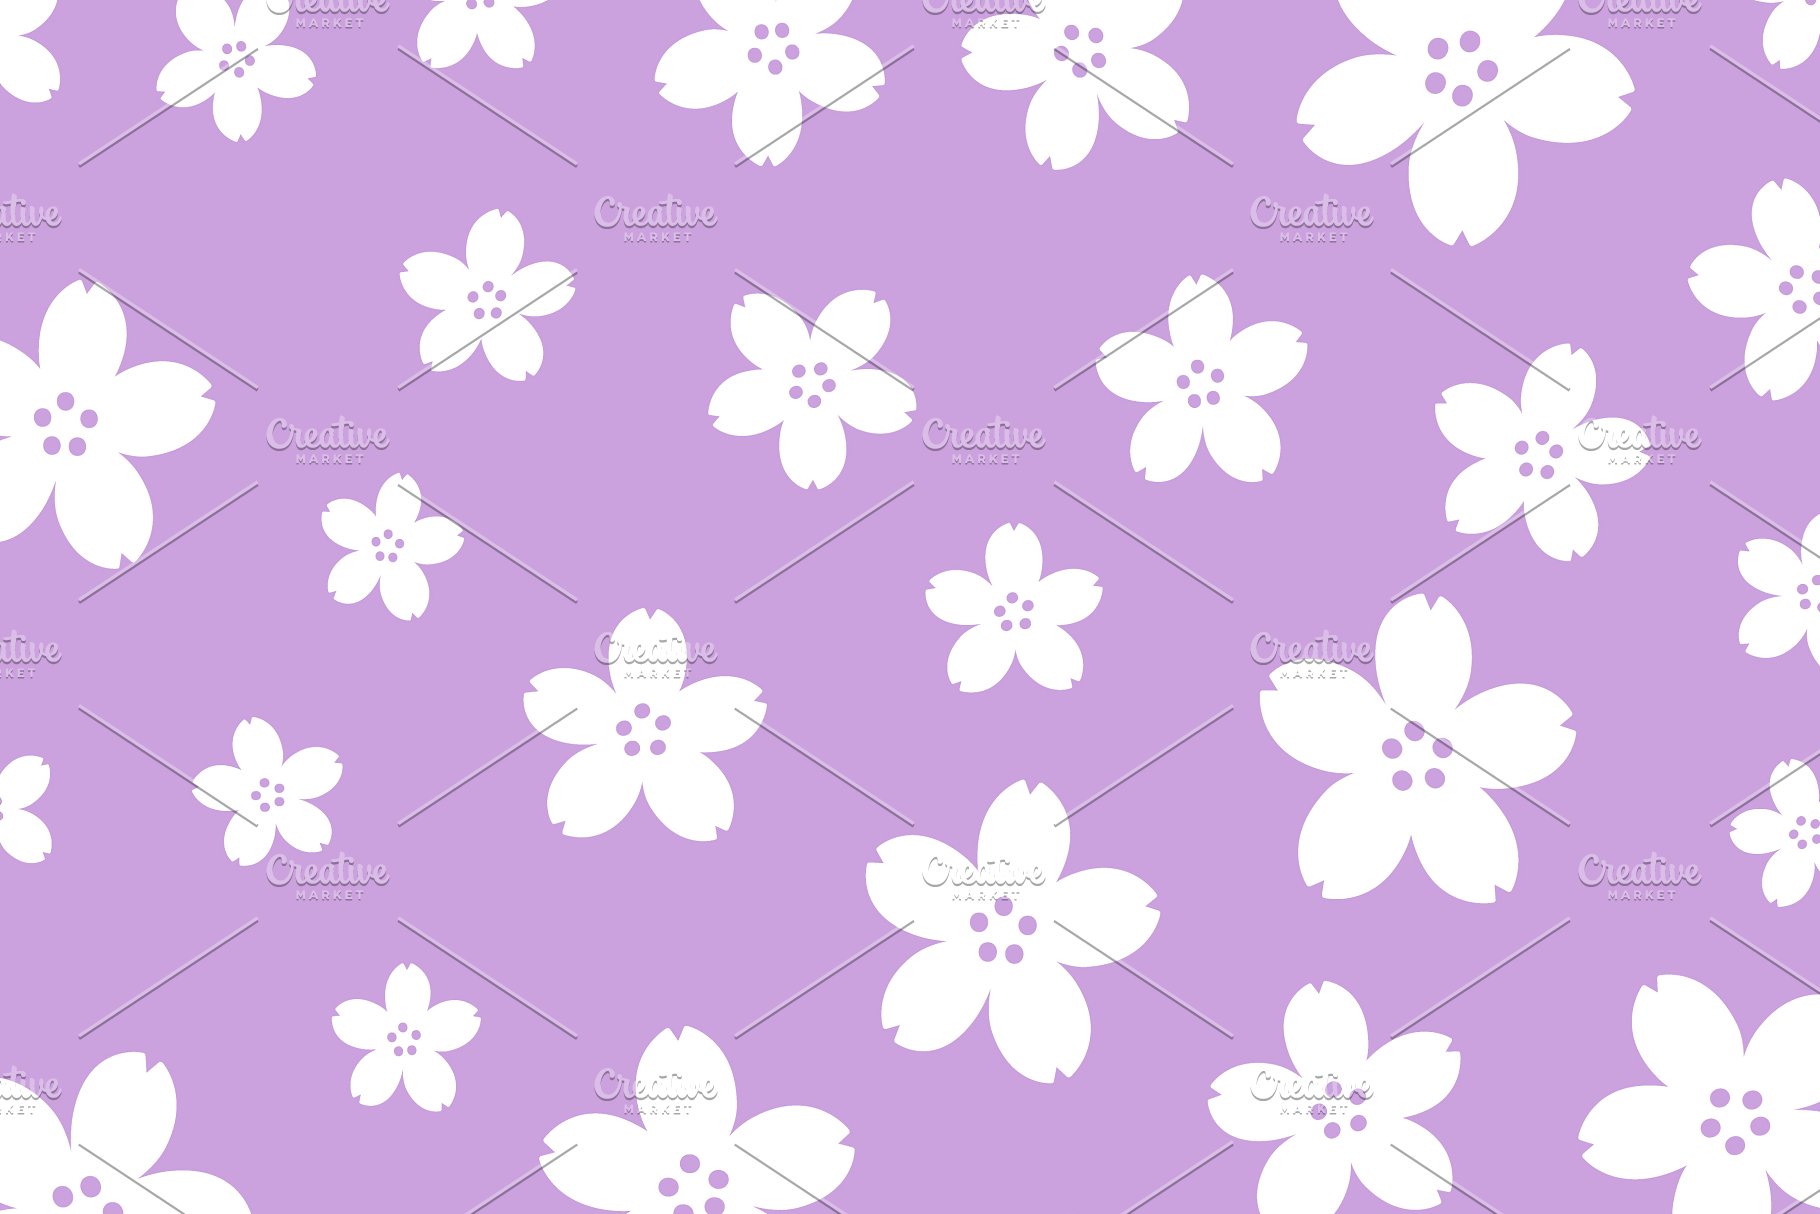 60种配色1440款花卉图案纹理 1,440 Floral Patterns in 60 Colors插图(16)